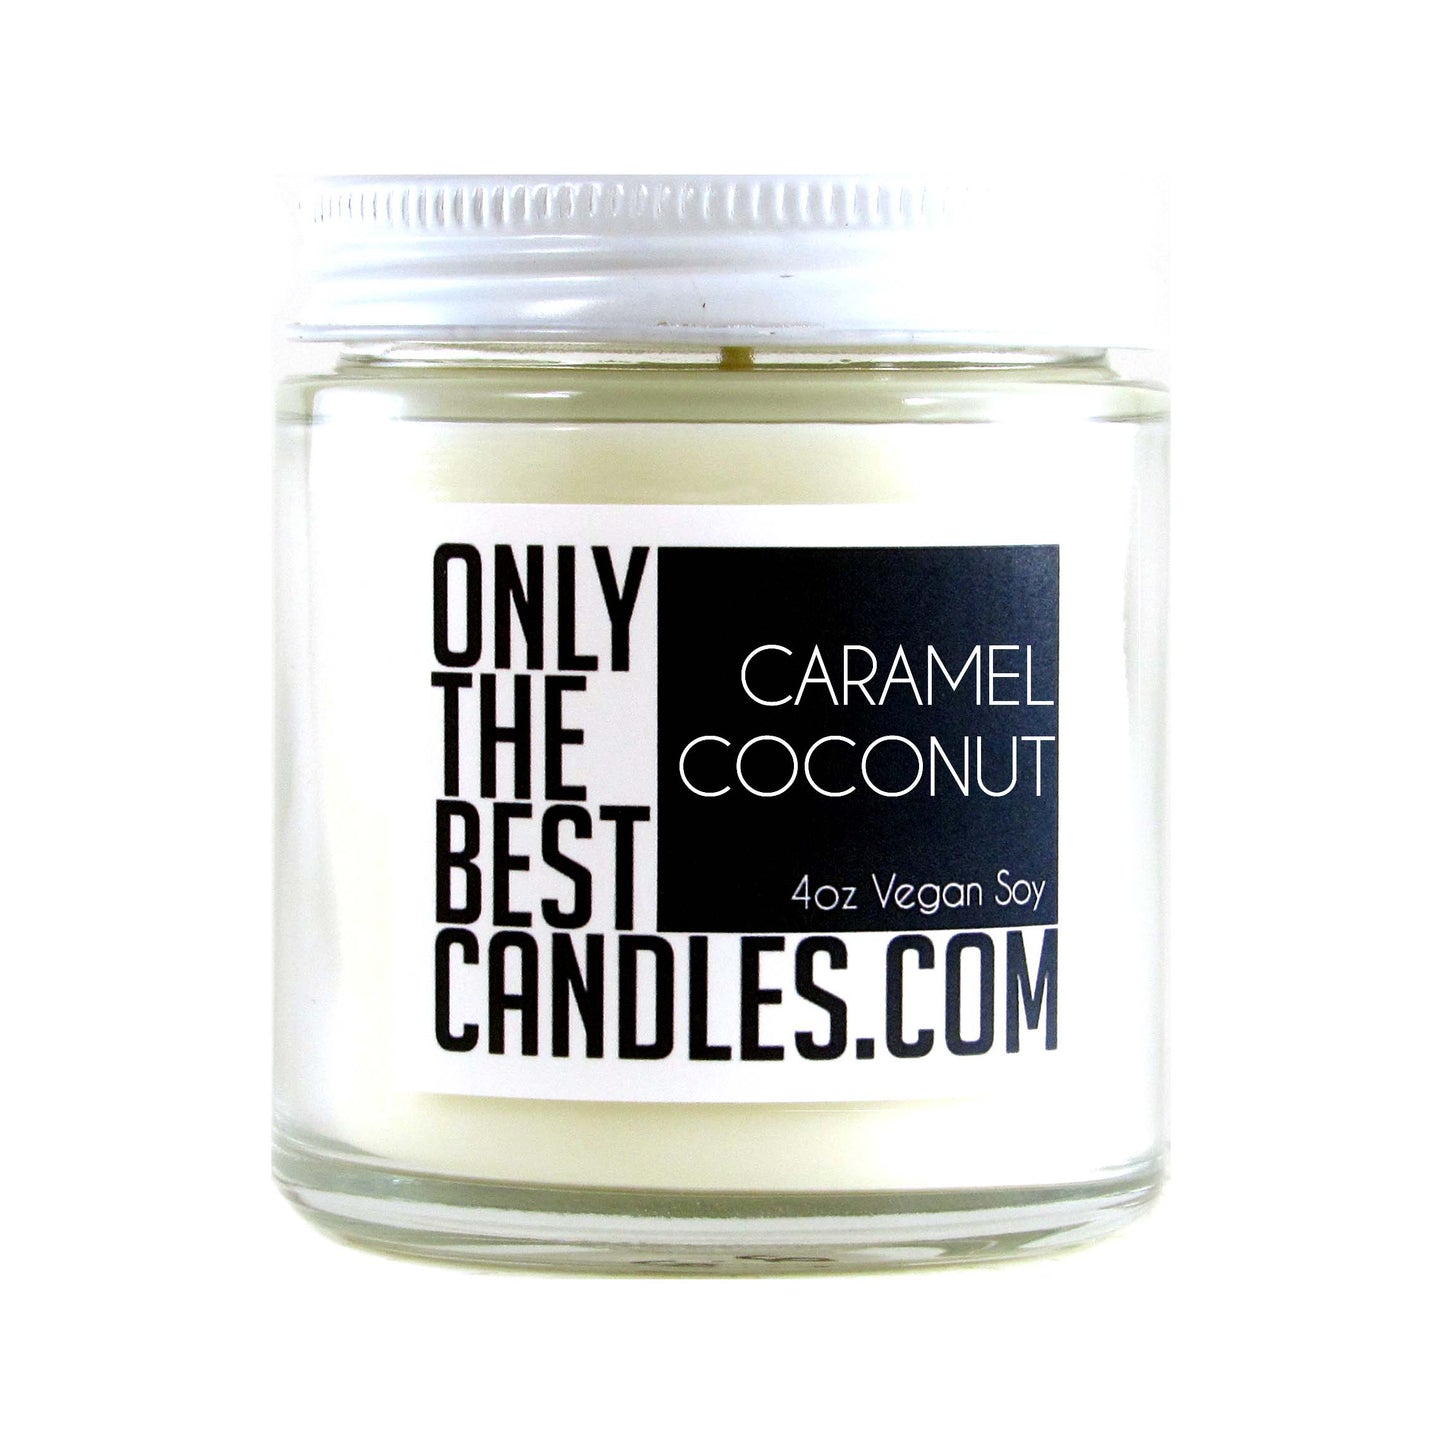 Caramel Coconut 4oz Candle